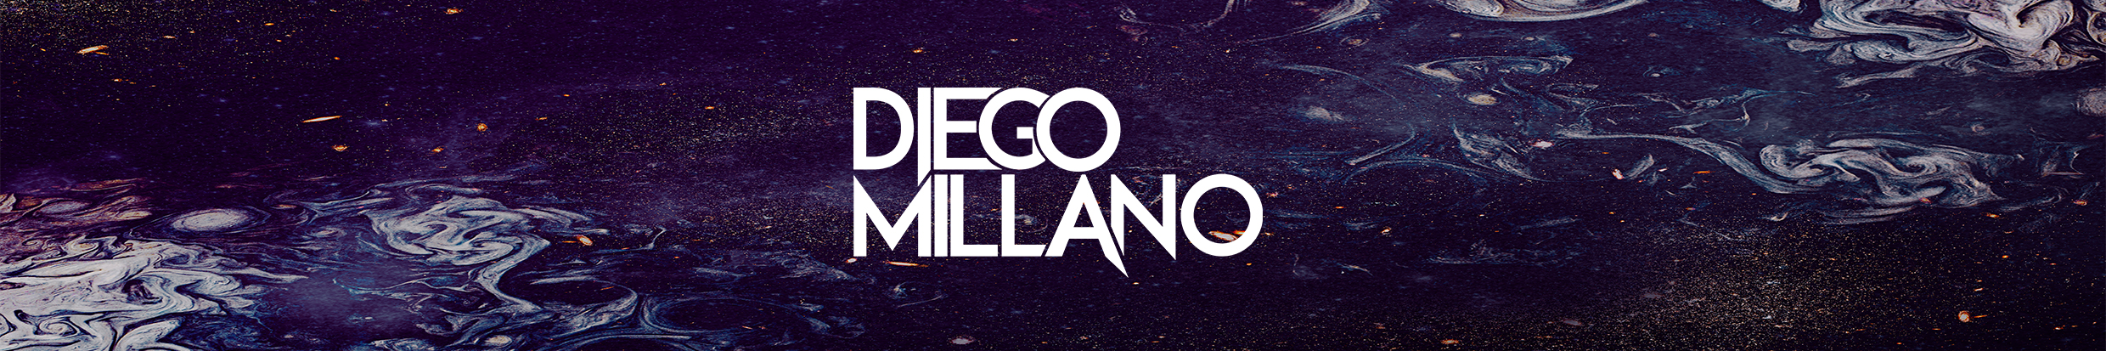 Diego Millano